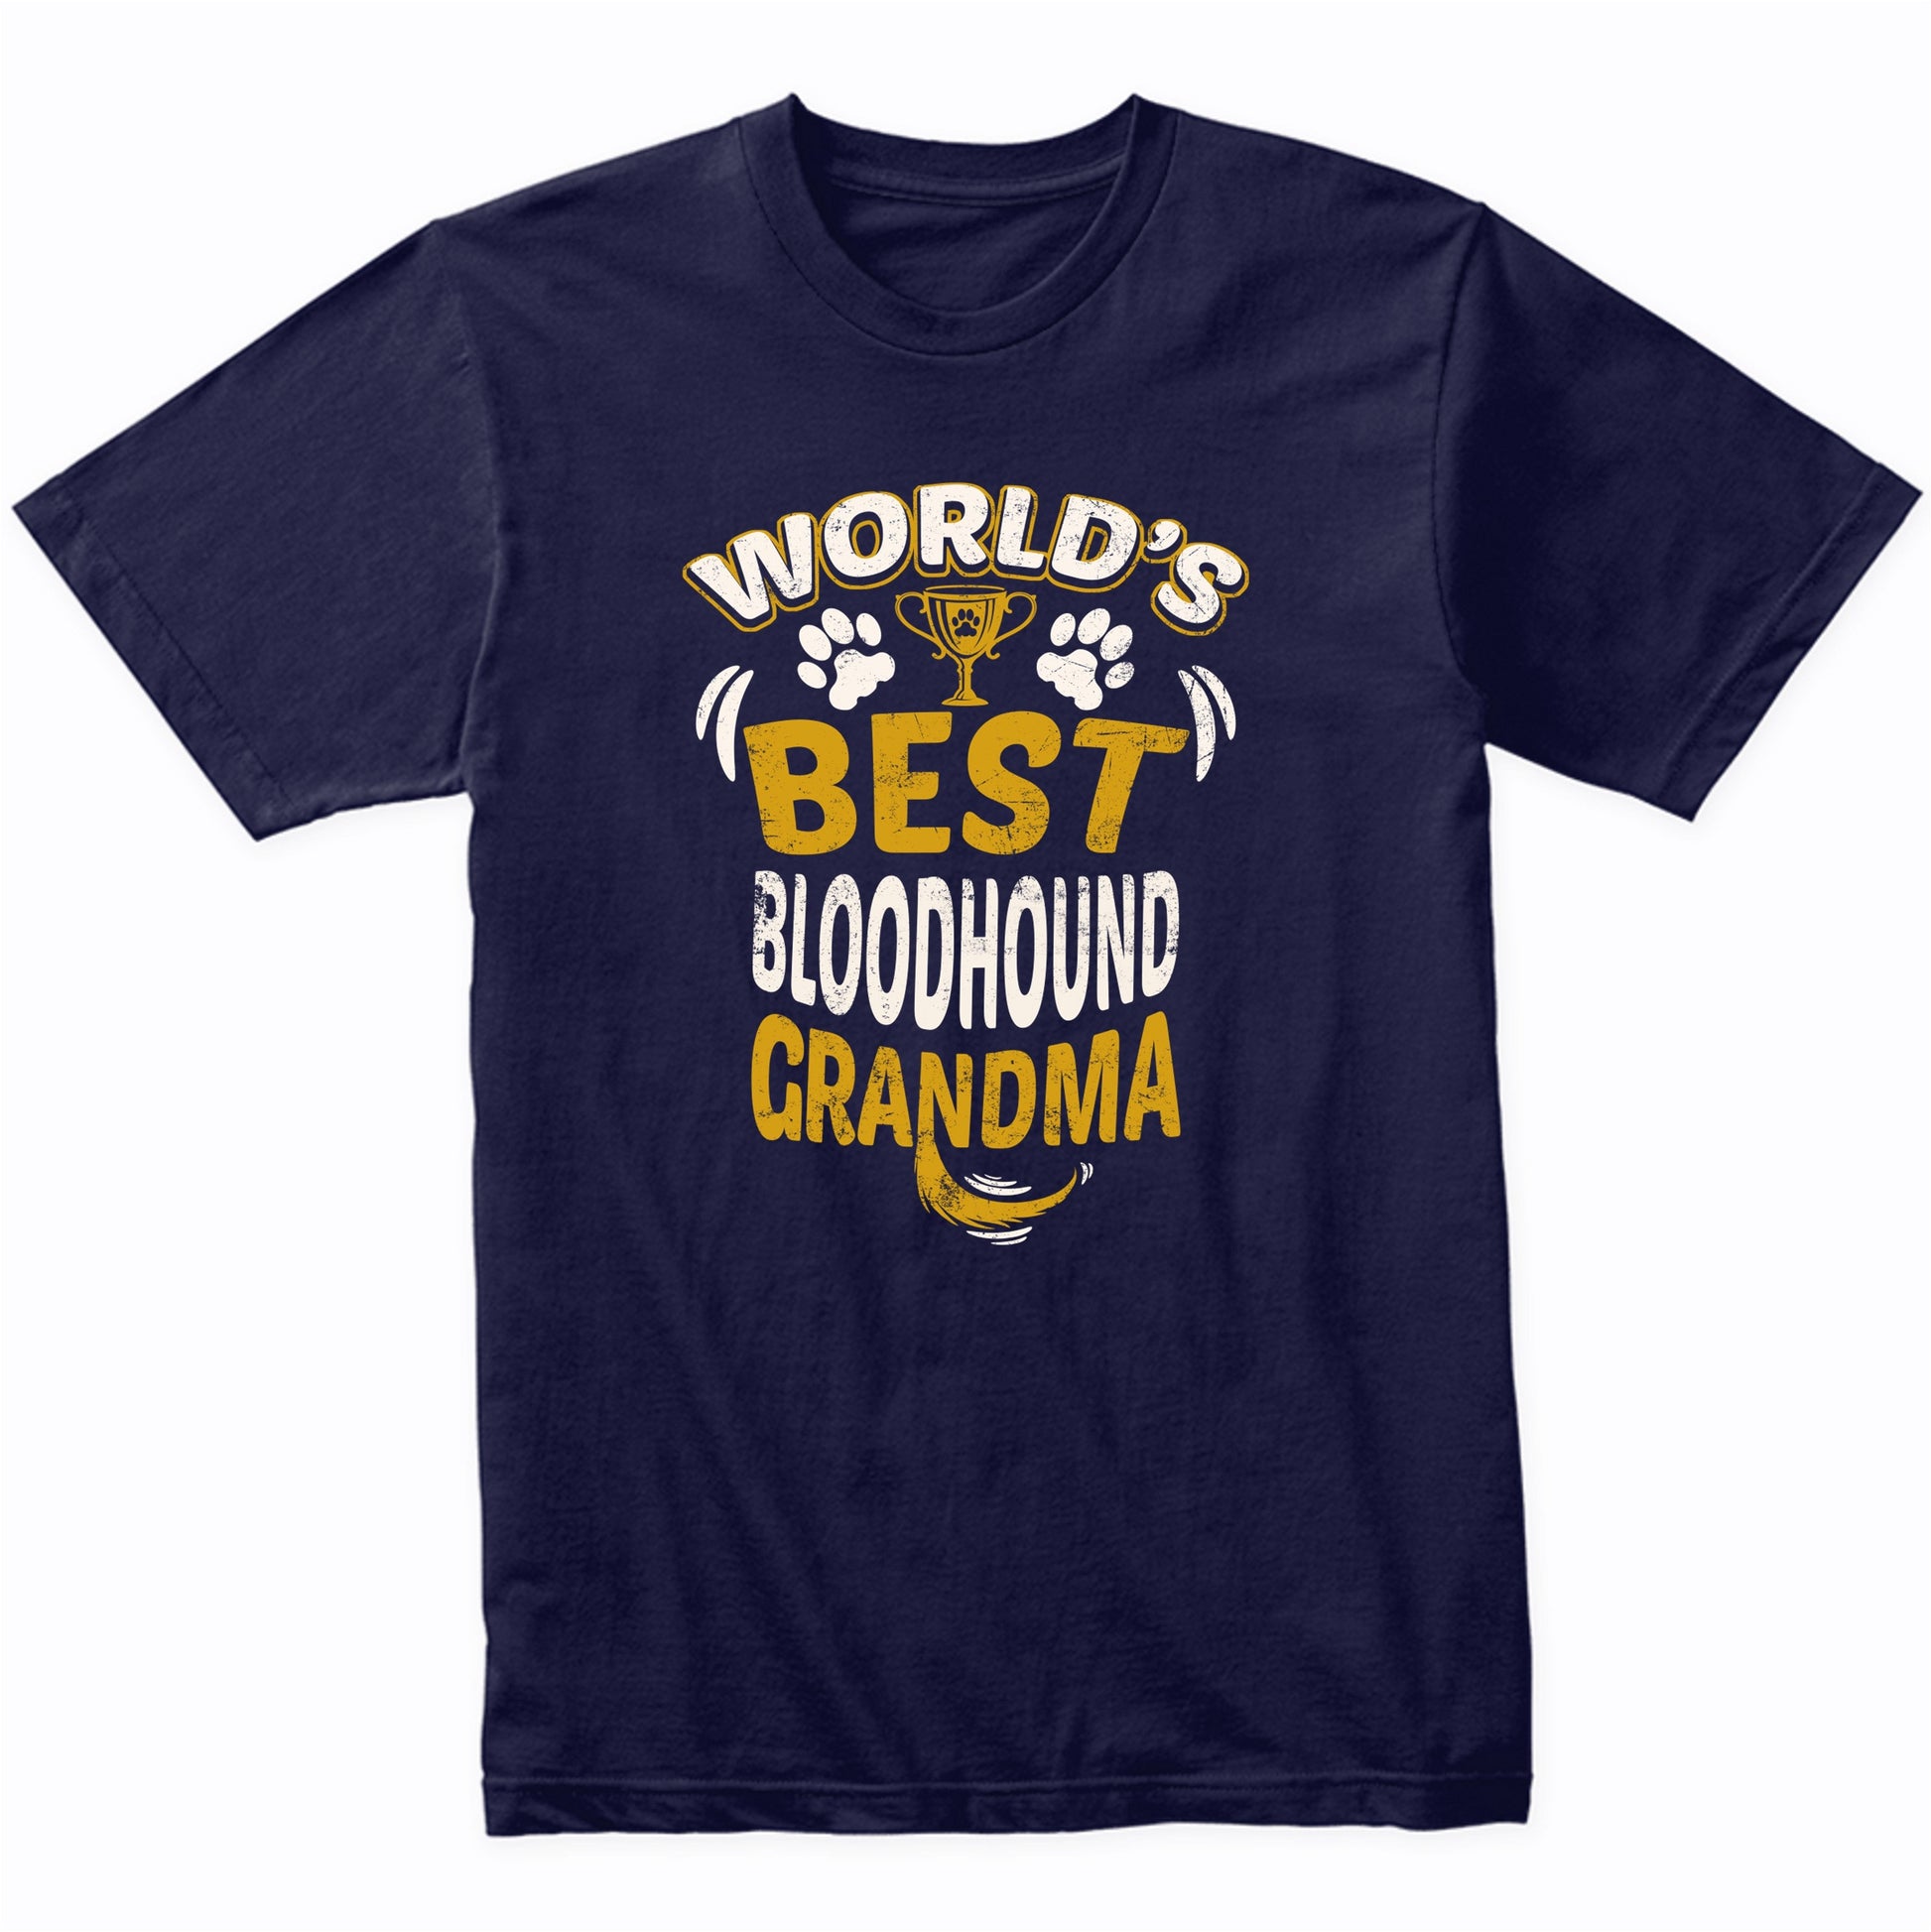 World's Best Bloodhound Grandma Graphic T-Shirt